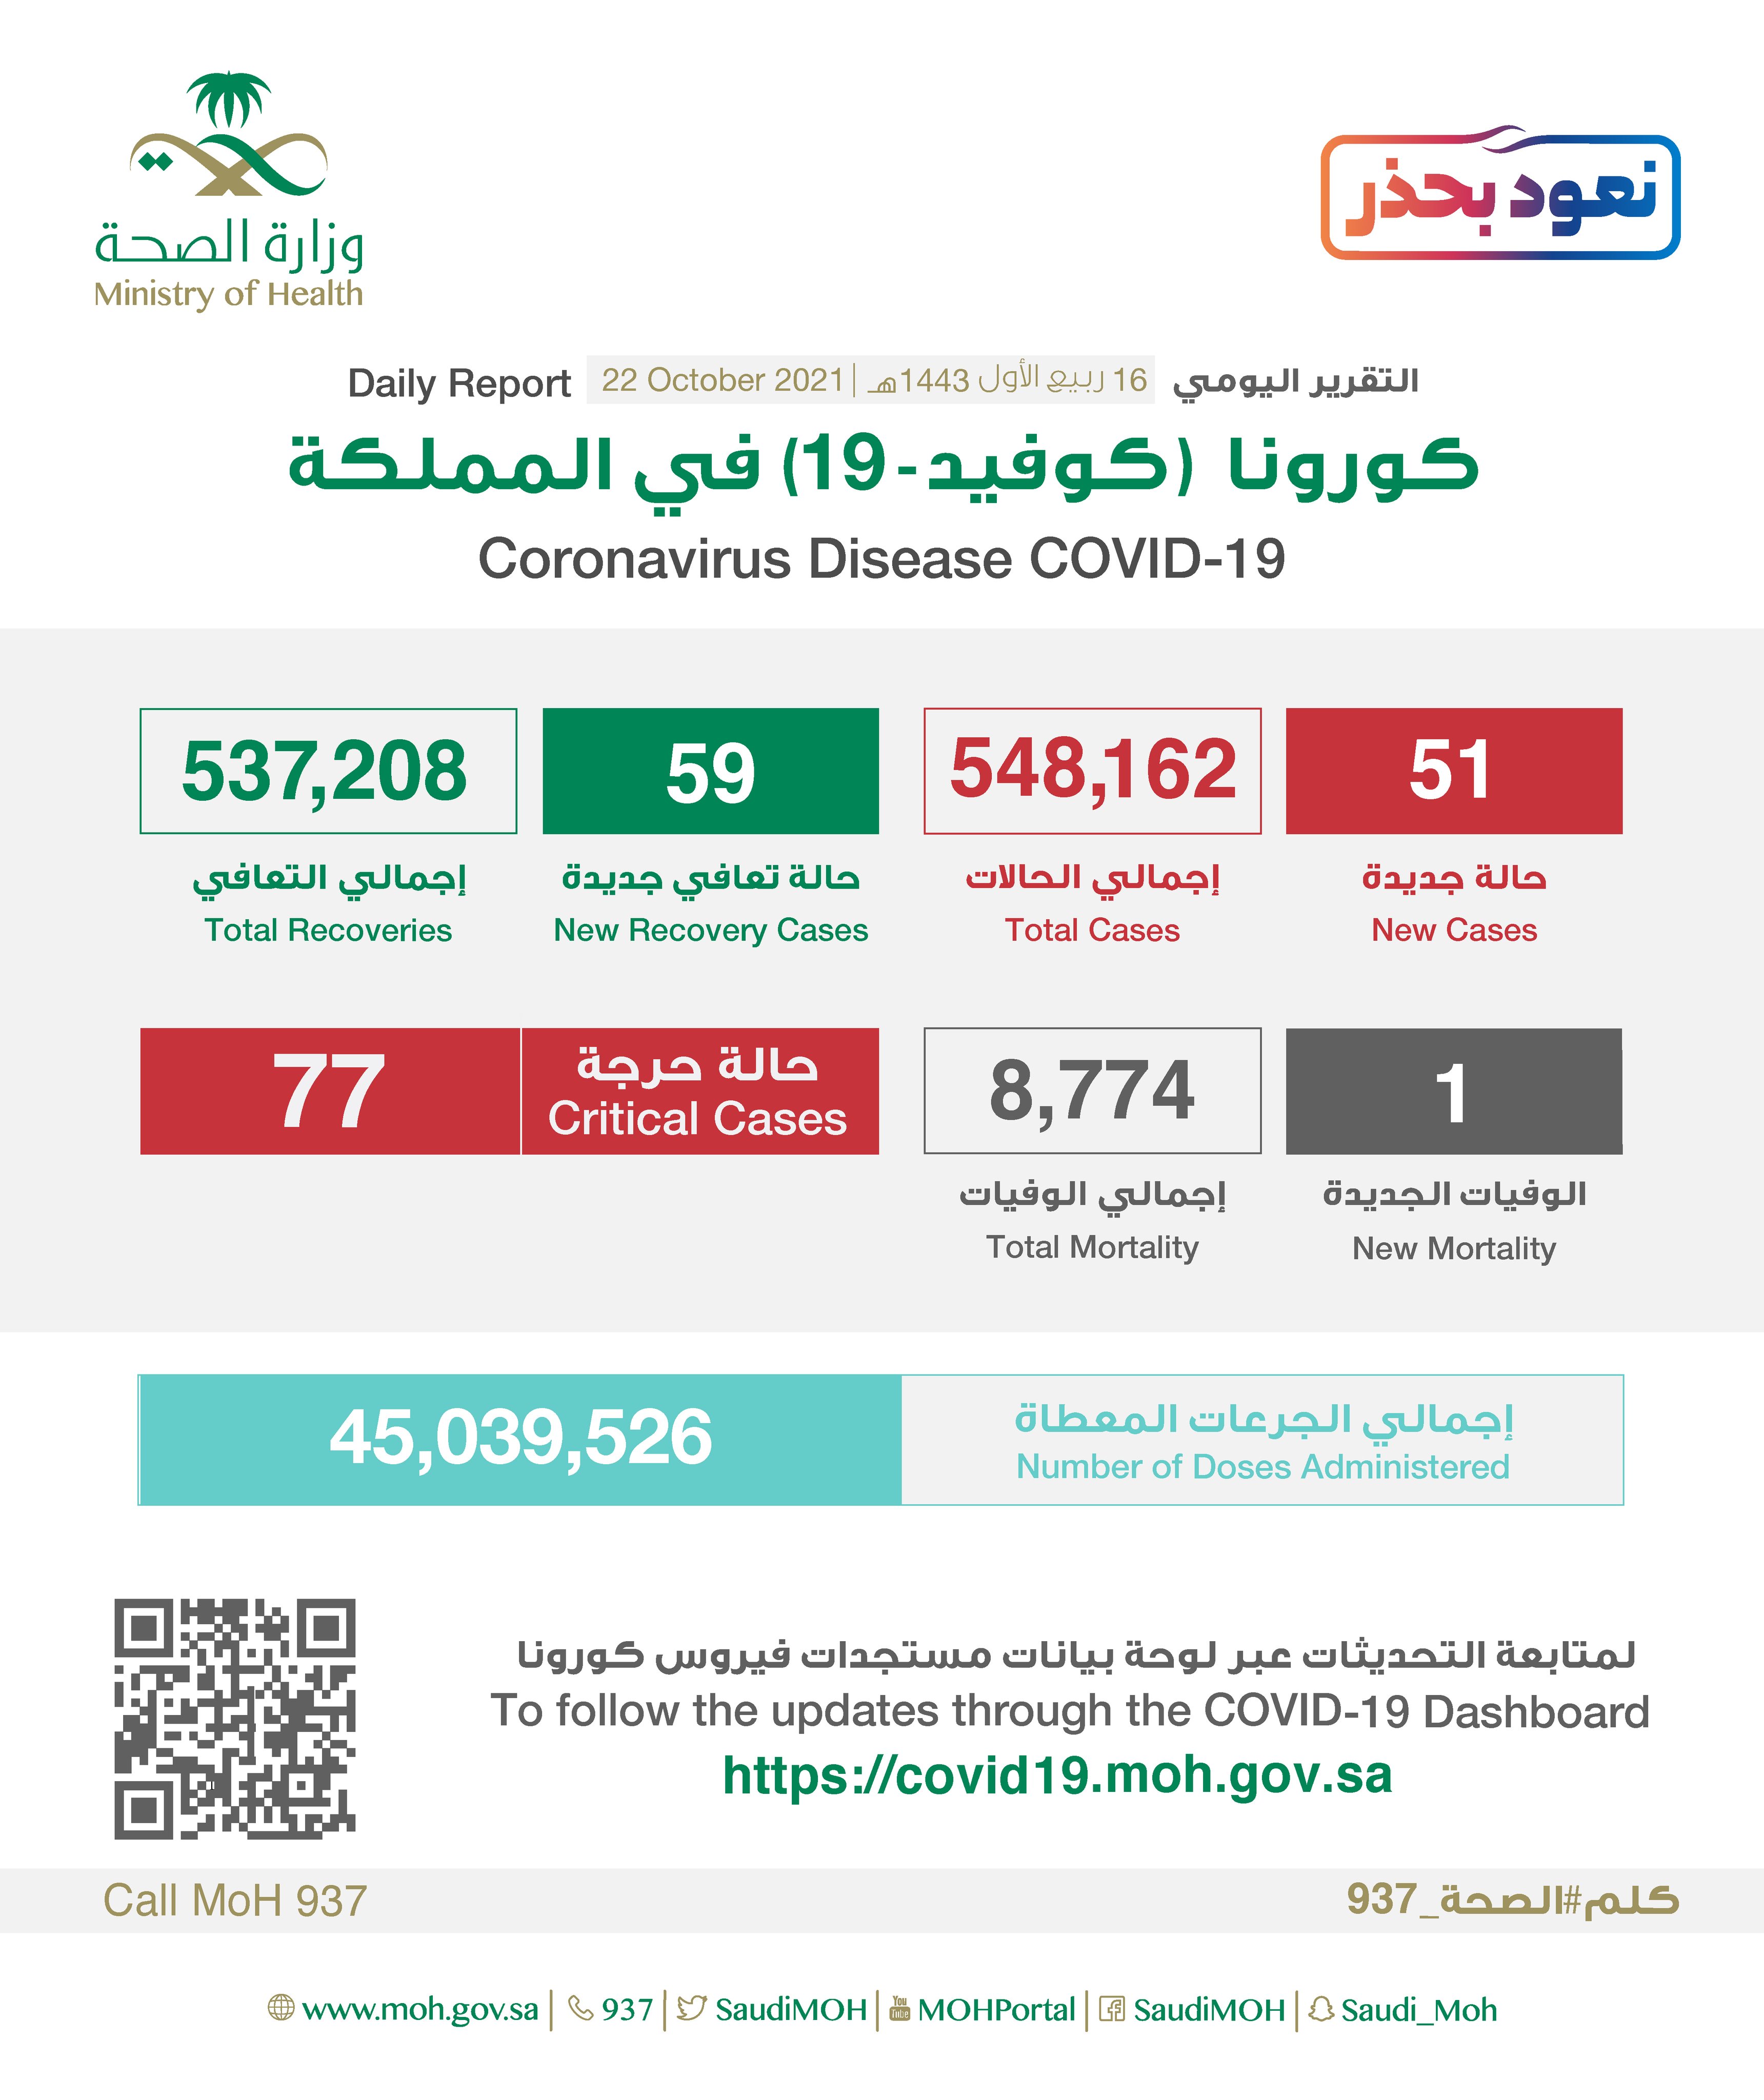 Saudi Arabia Coronavirus : Total Cases : 548,162, New Cases : 51, Cured : 537,208, Deaths: 8,774, Active Cases : 2,180